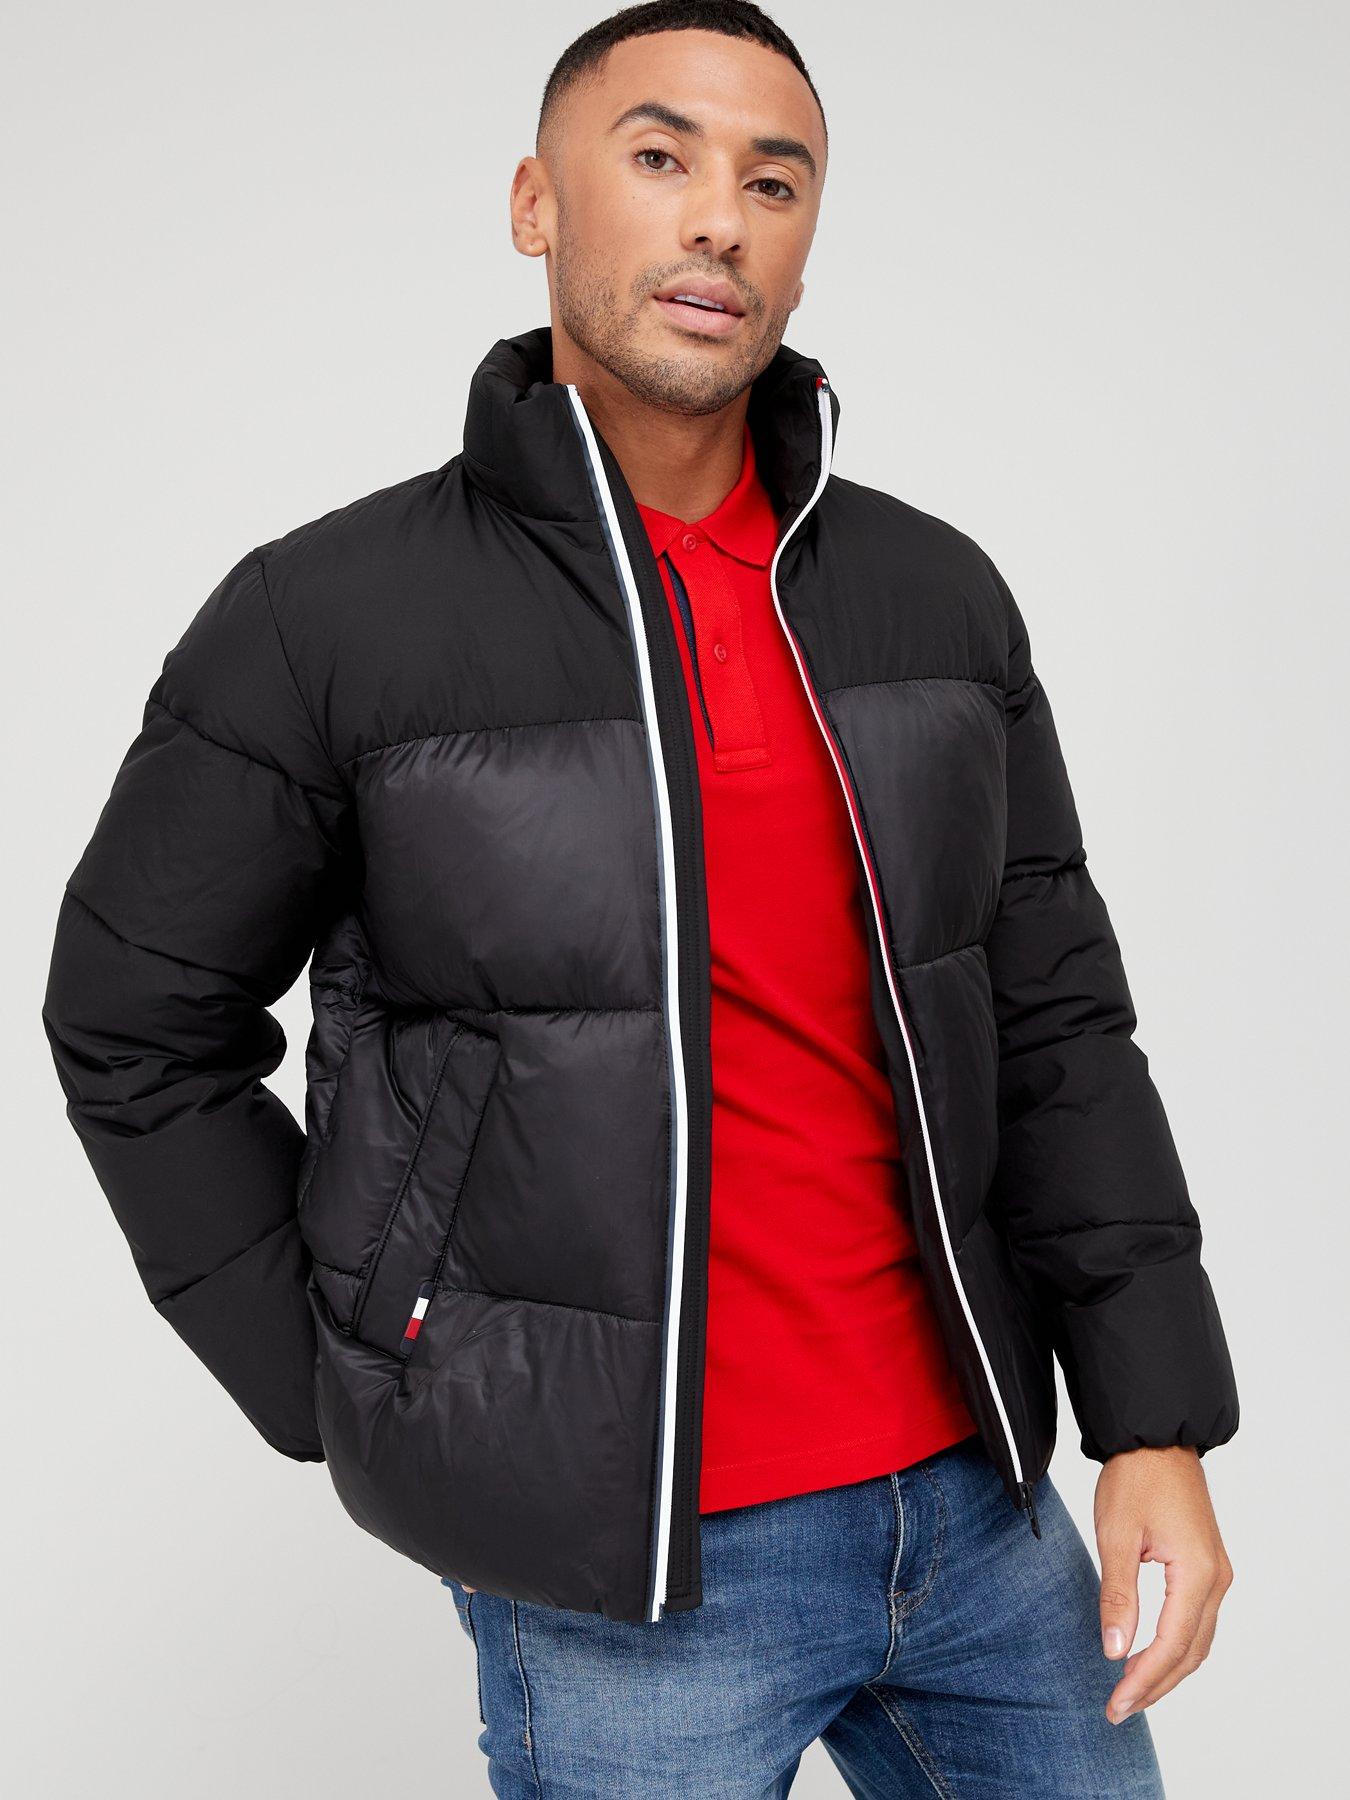 Blue S Tommy Hilfiger jacket discount 66% MEN FASHION Jackets Basic 